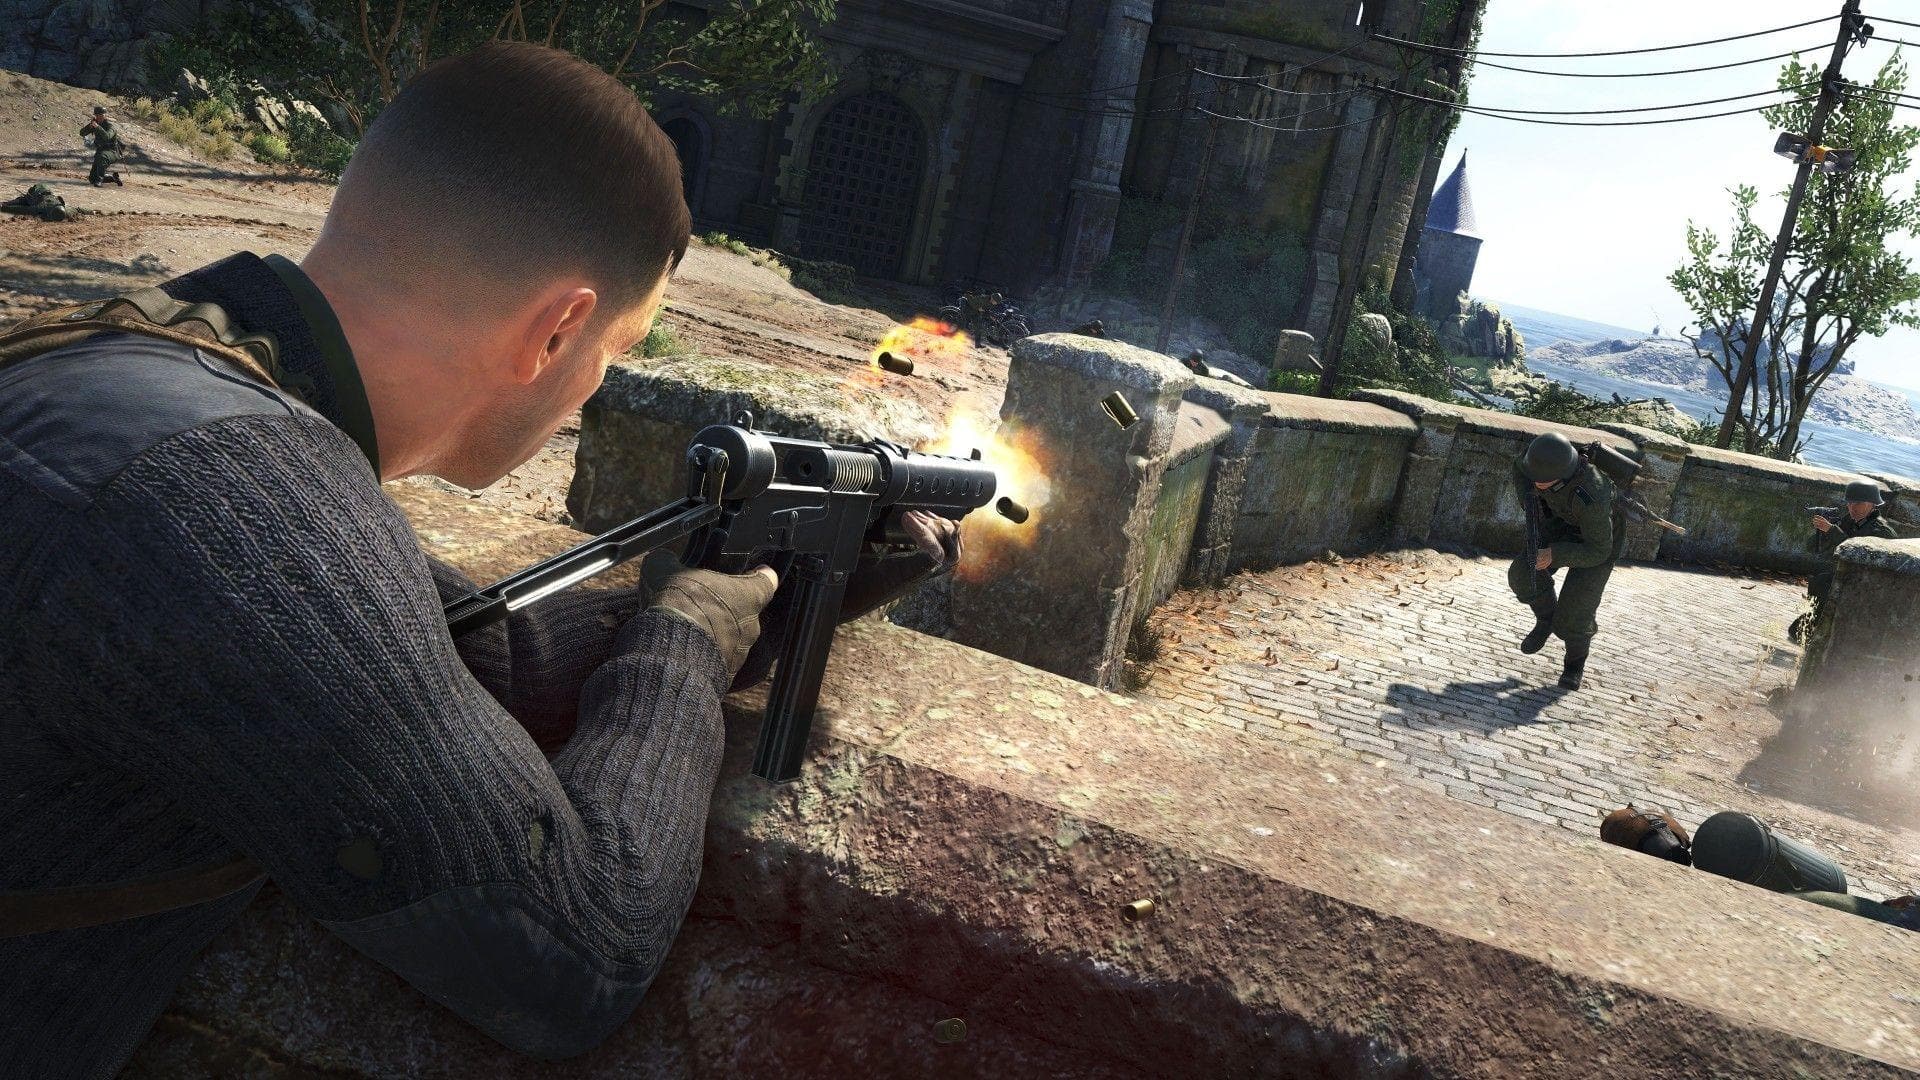 Sniper Elite 5 (Deluxe Edition) - Xbox - EXON - גיימינג ותוכנות - משחקים ותוכנות למחשב ולאקס בוקס!